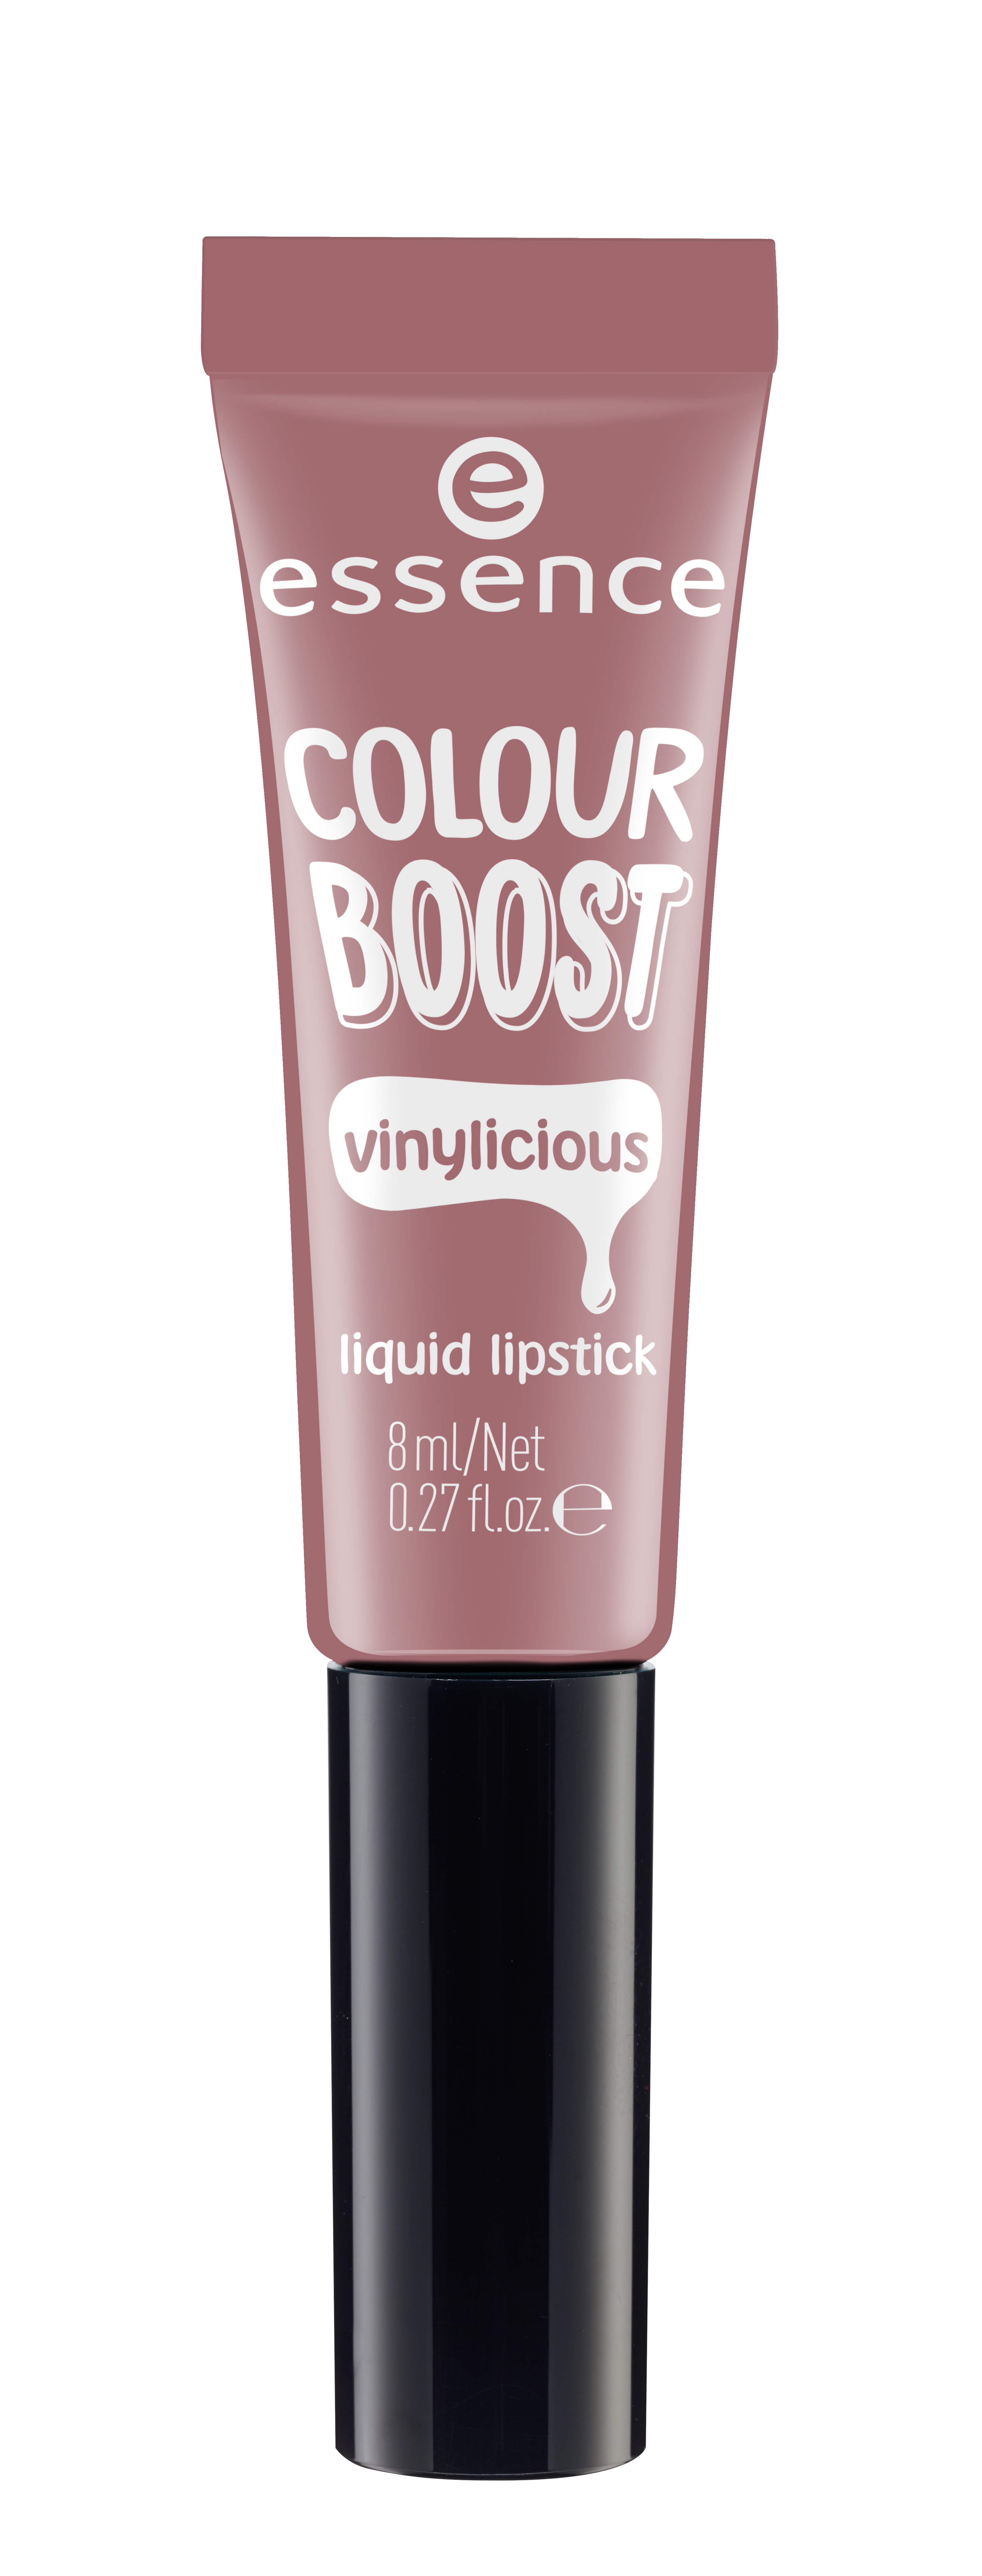 essence colour boost vinylicious liquid lipstick 04 - เอสเซนส์คัลเลอร์บูสท์ไวนิลลิเชียสลิควิดลิปสติก 04